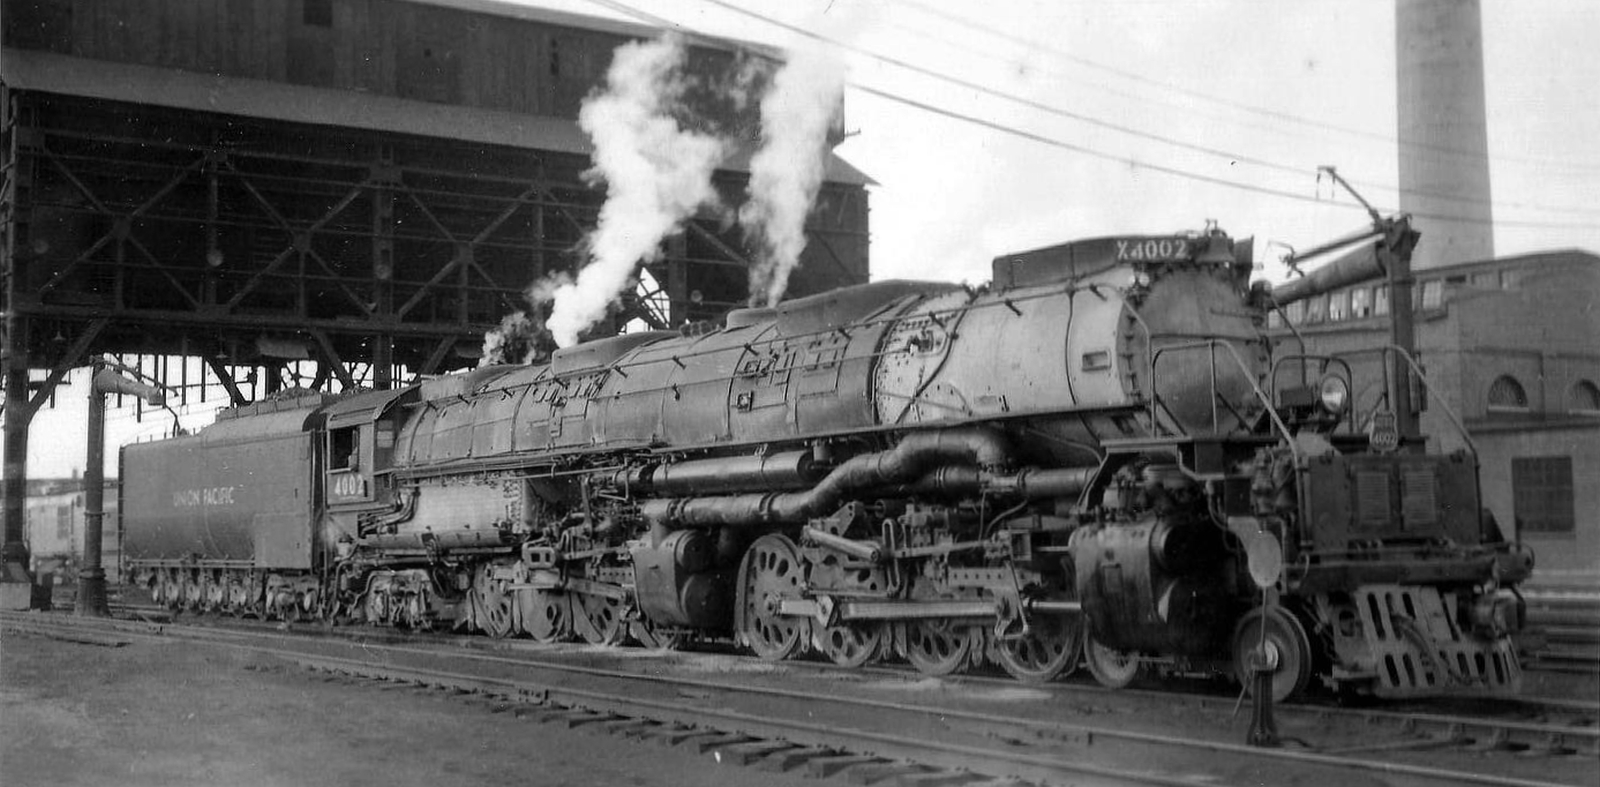 No. 4002 in December 1954 in Laramie, Wyoming